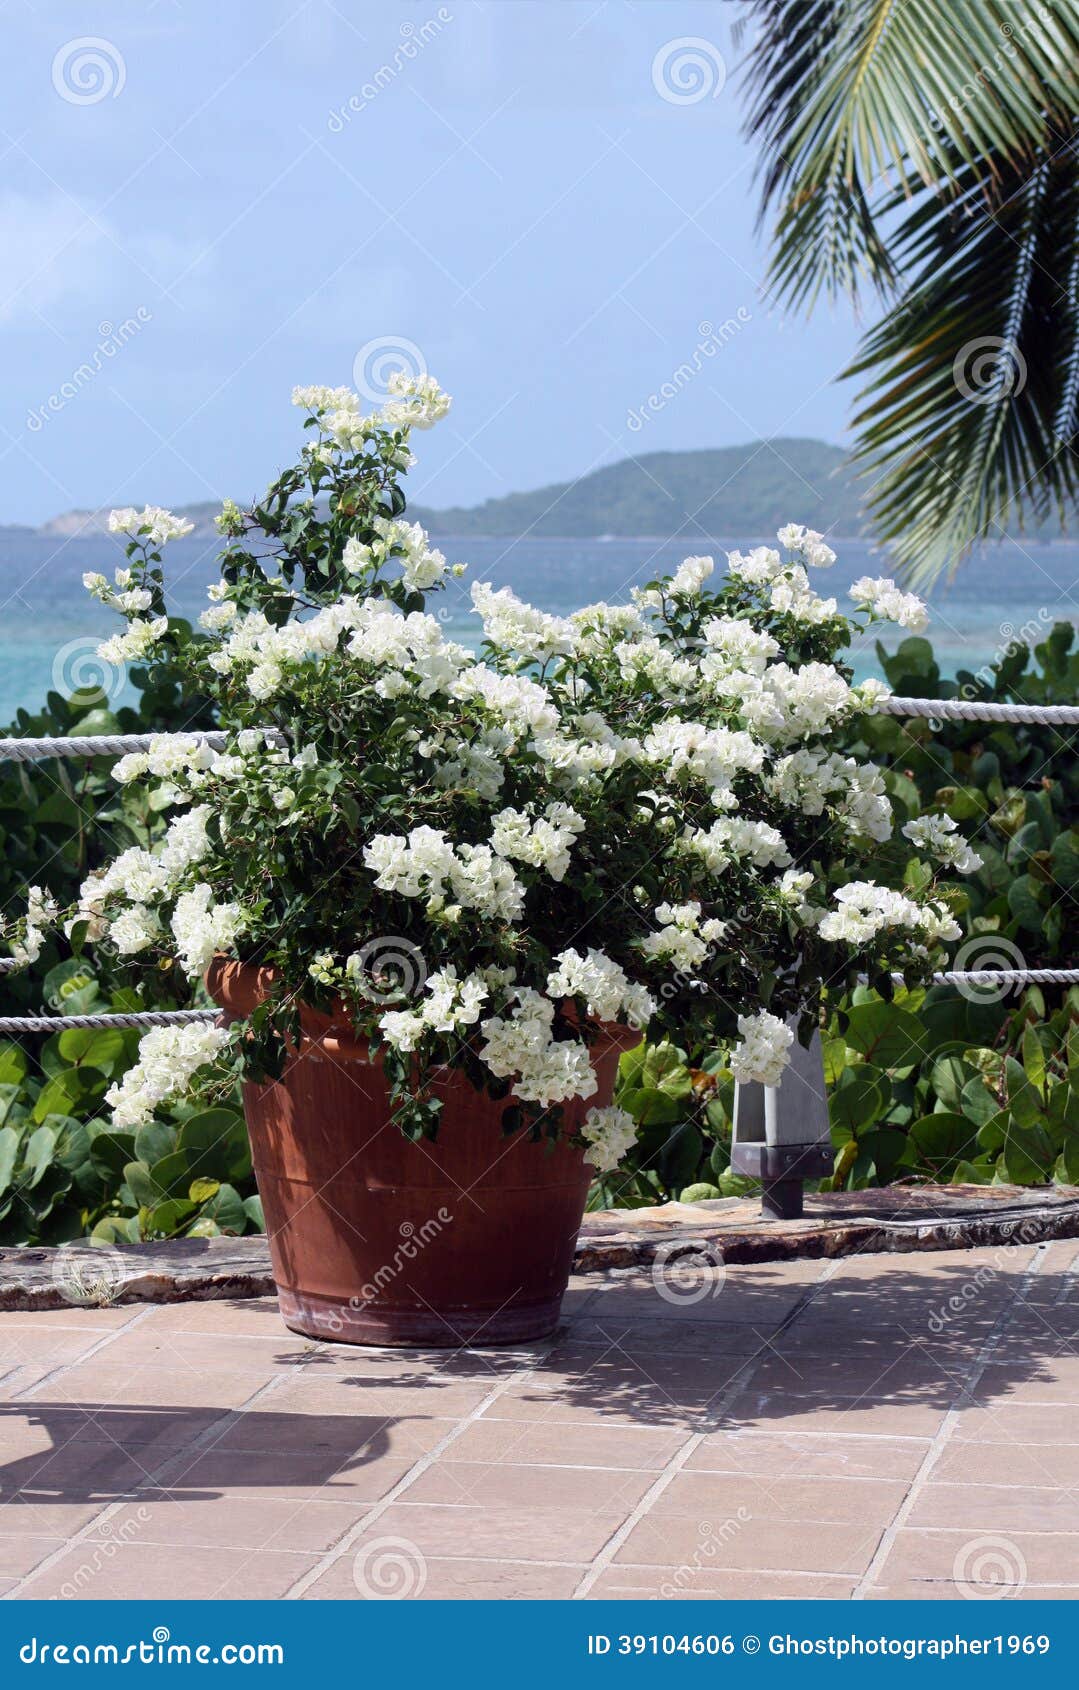 flower arrangement on caribbean background